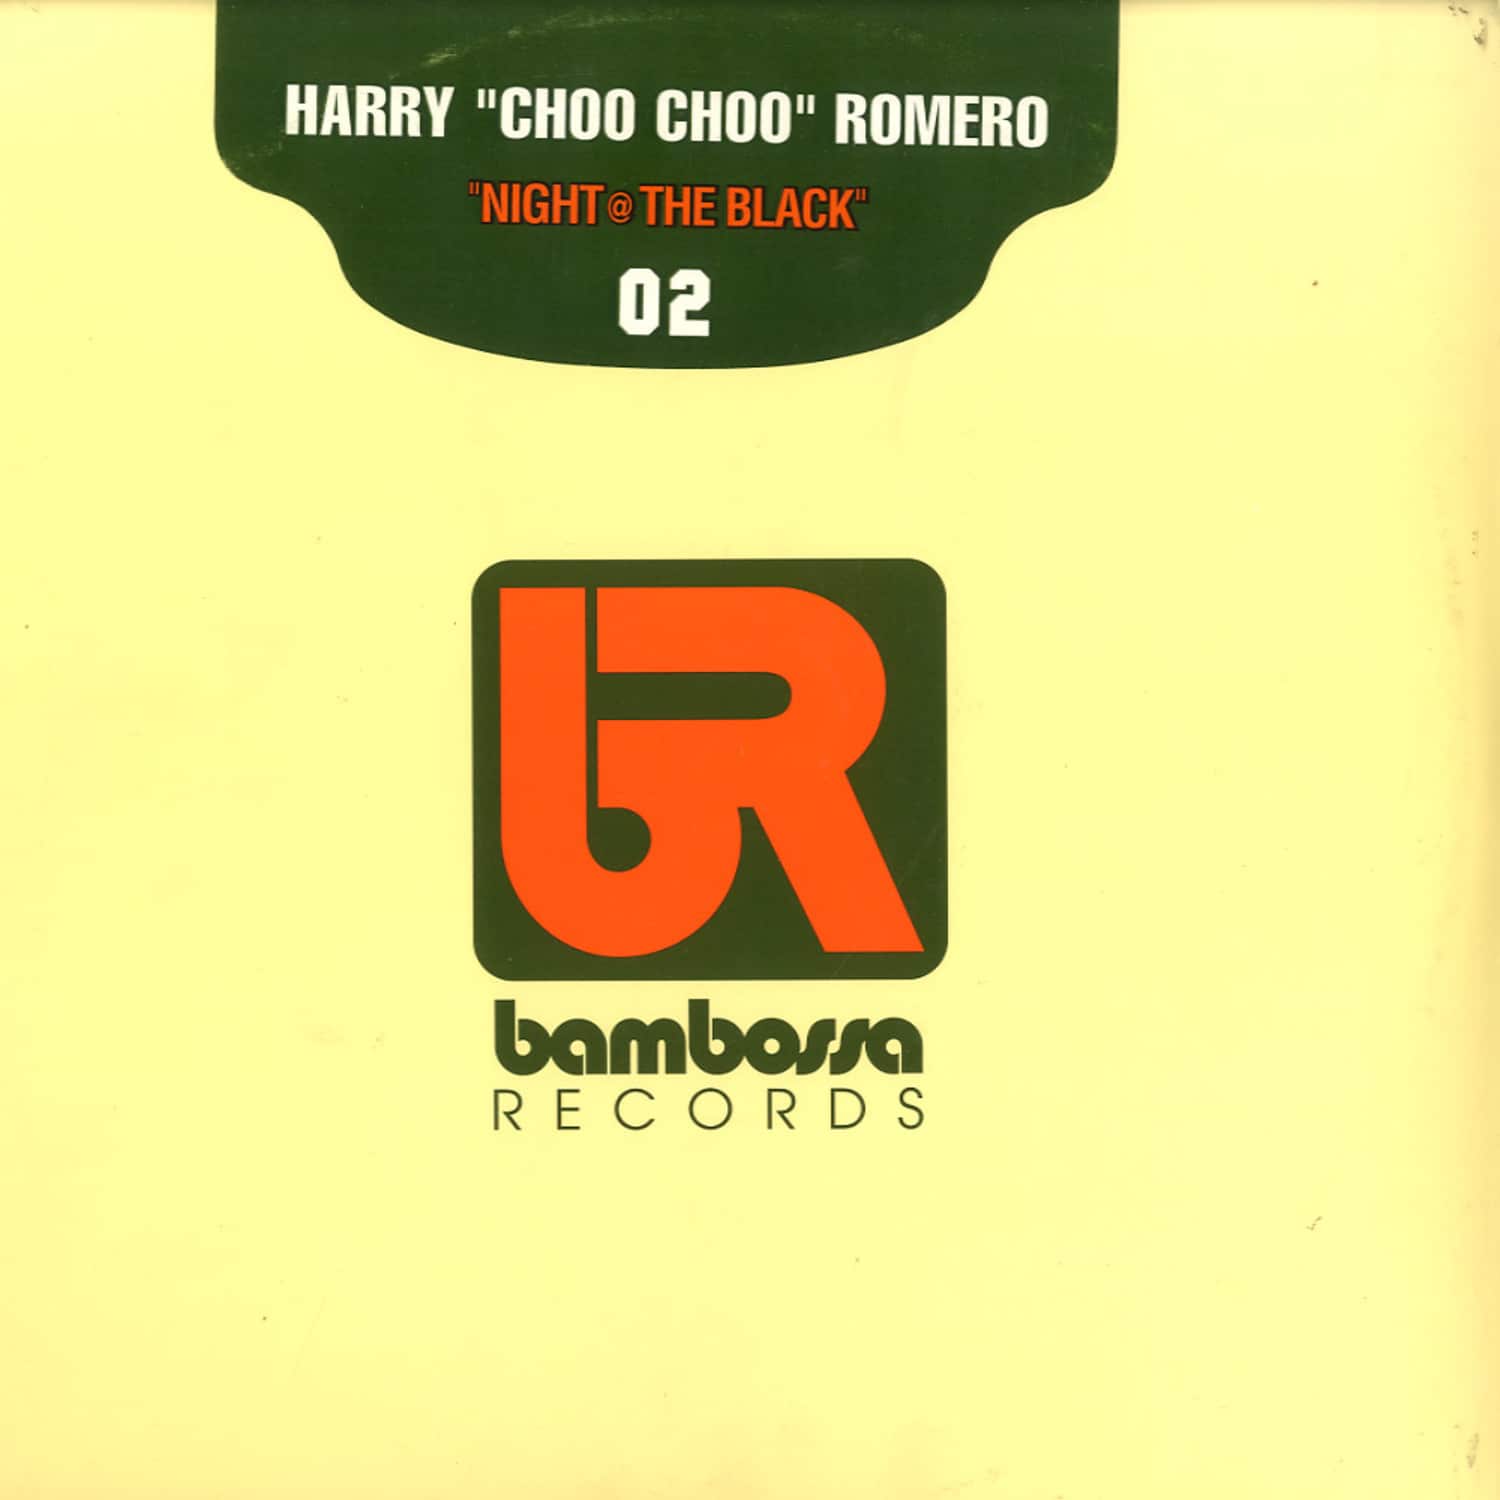 Harry Choo Choo Romero - NIGHT AT THE BLACK